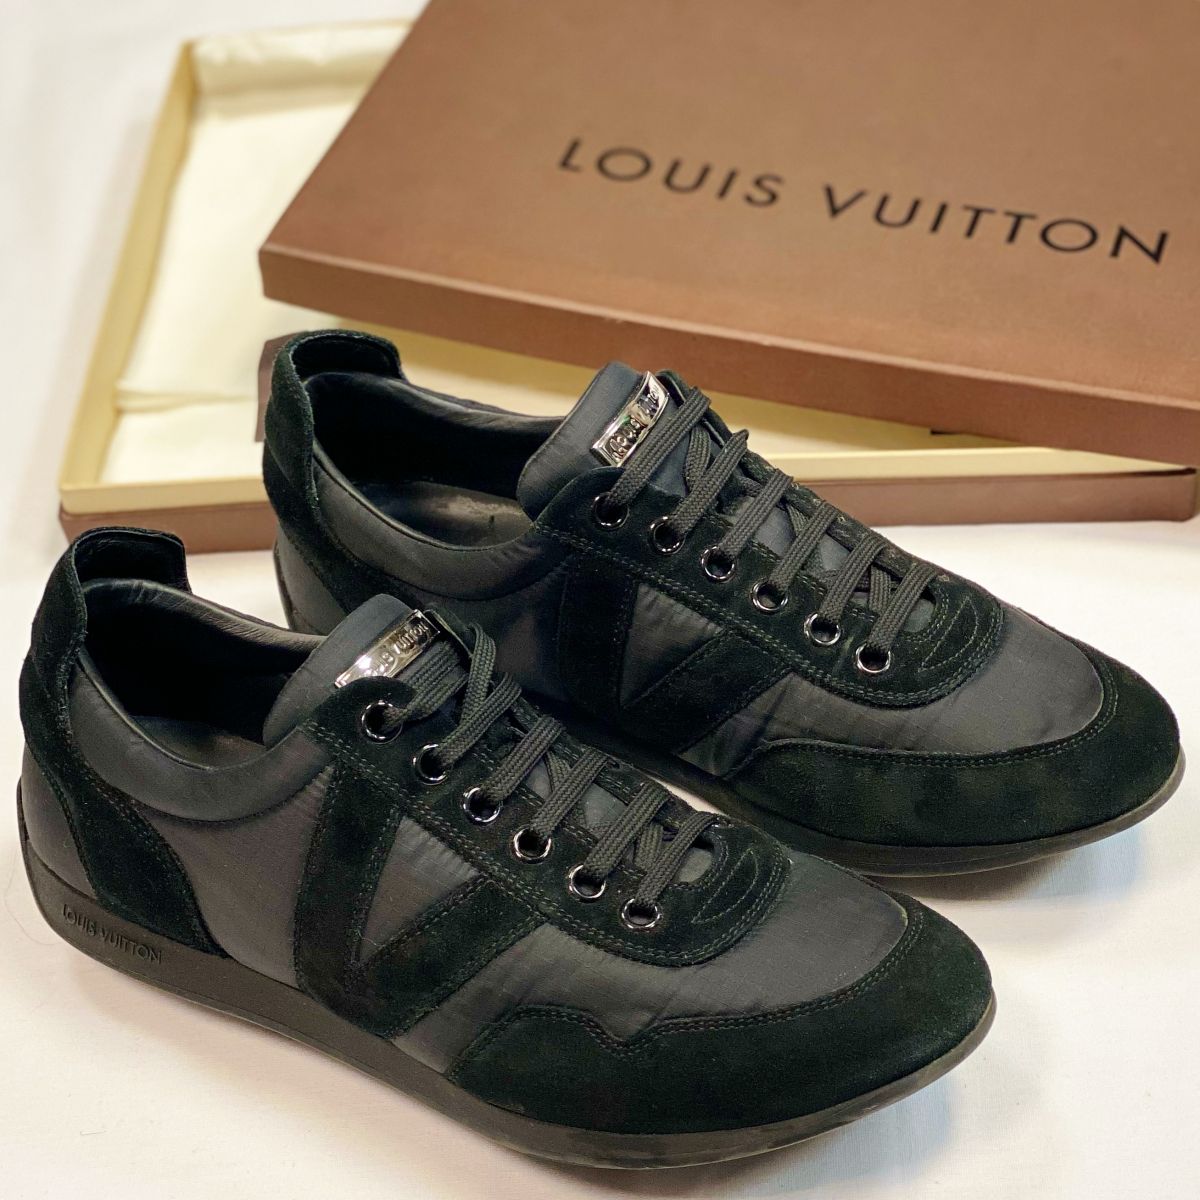 Кеды Louis Vuitton размер 41.5 цена 10 770 руб 